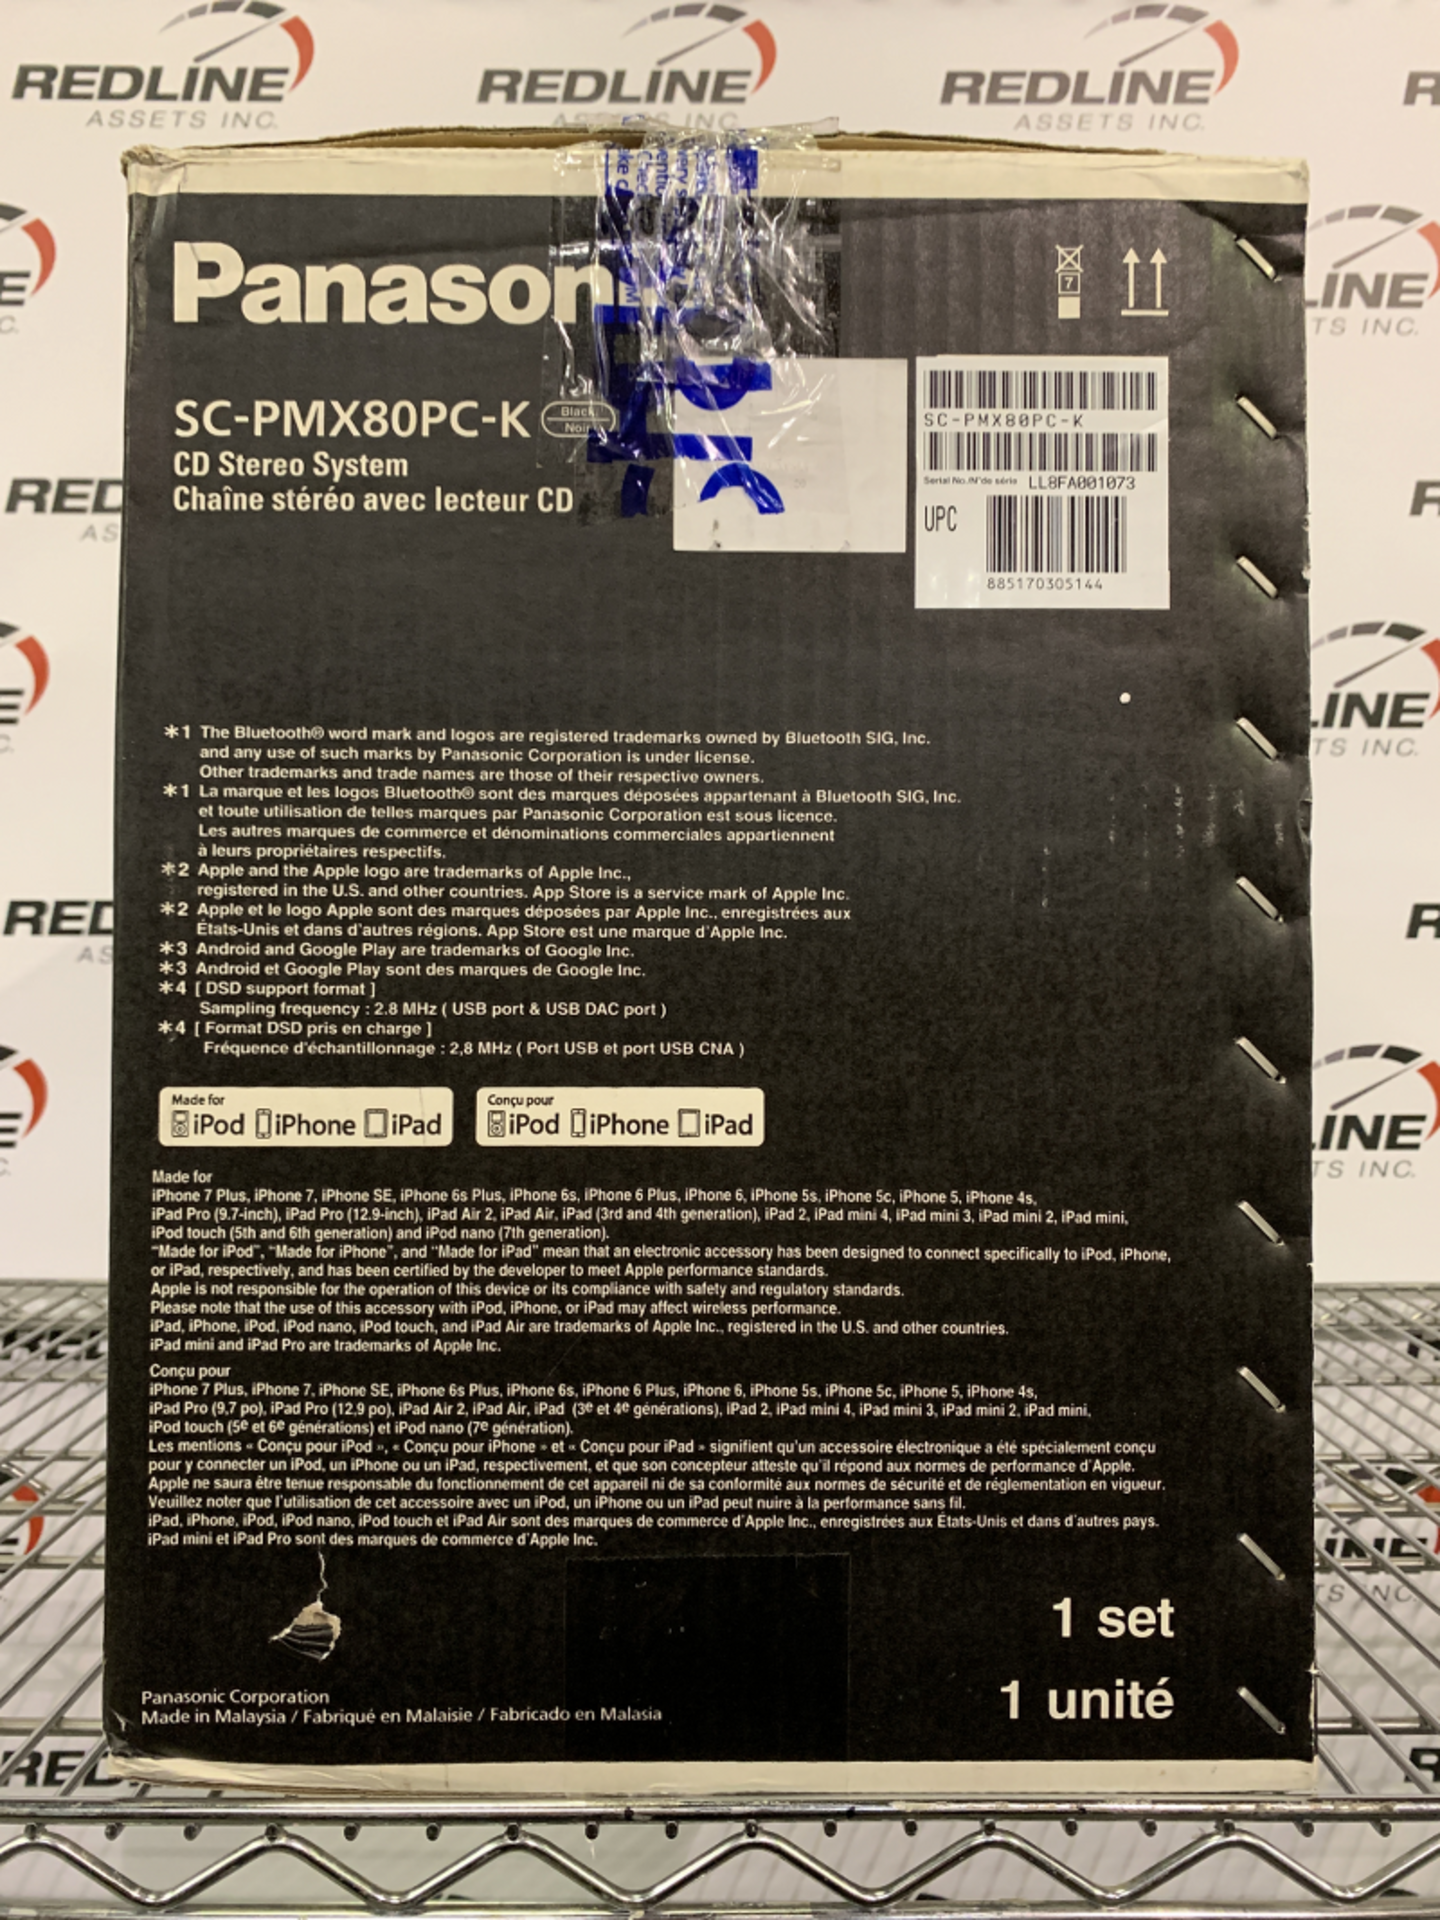 PANASONIC - CD STEREO SYSTEM - MODEL#: SC-PMX80PC-K - Image 2 of 2